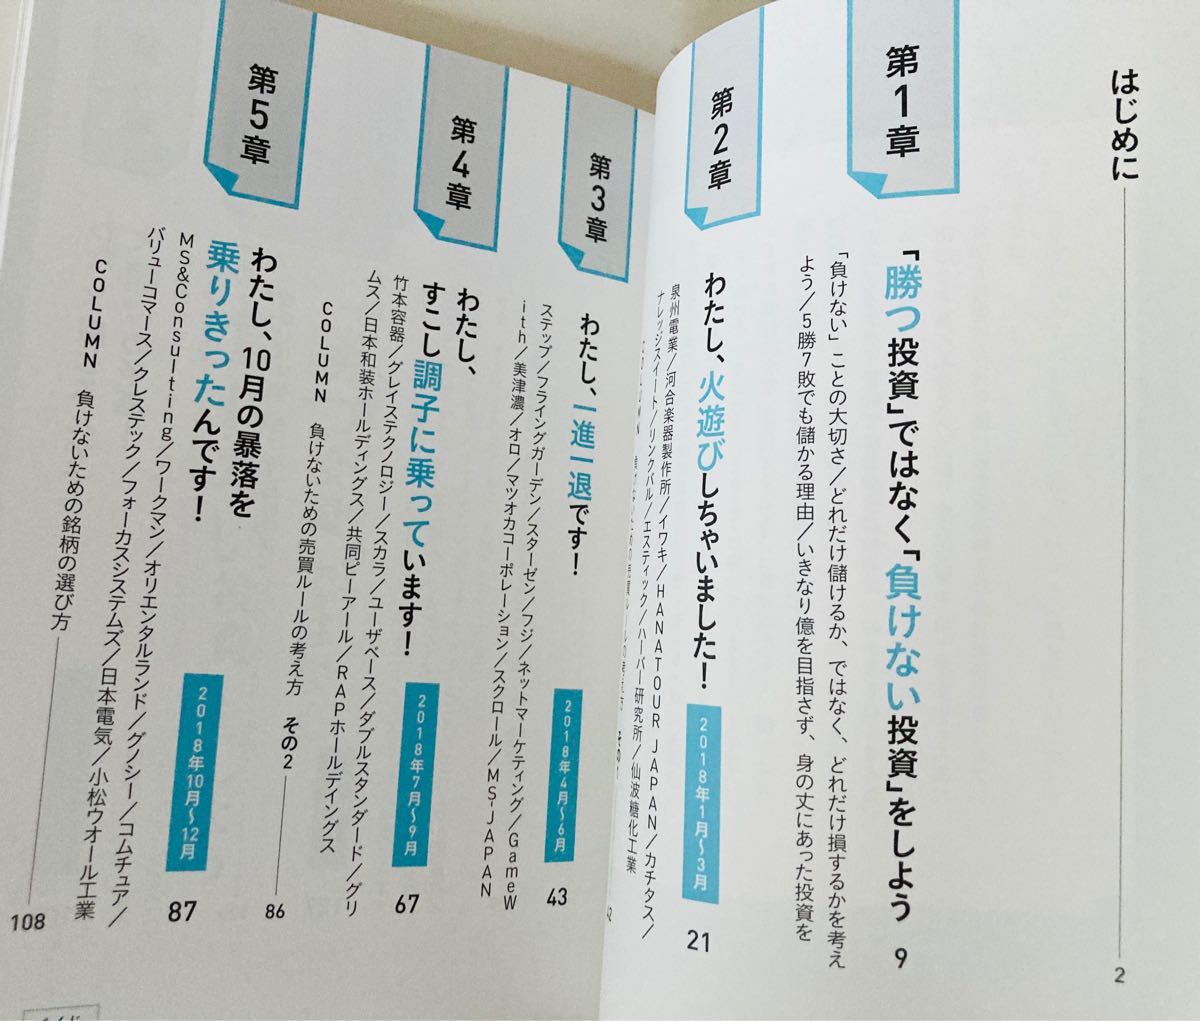 ZAIが作った株入門 改定第2版 、株は5勝7敗で十分儲かる! 2冊セット